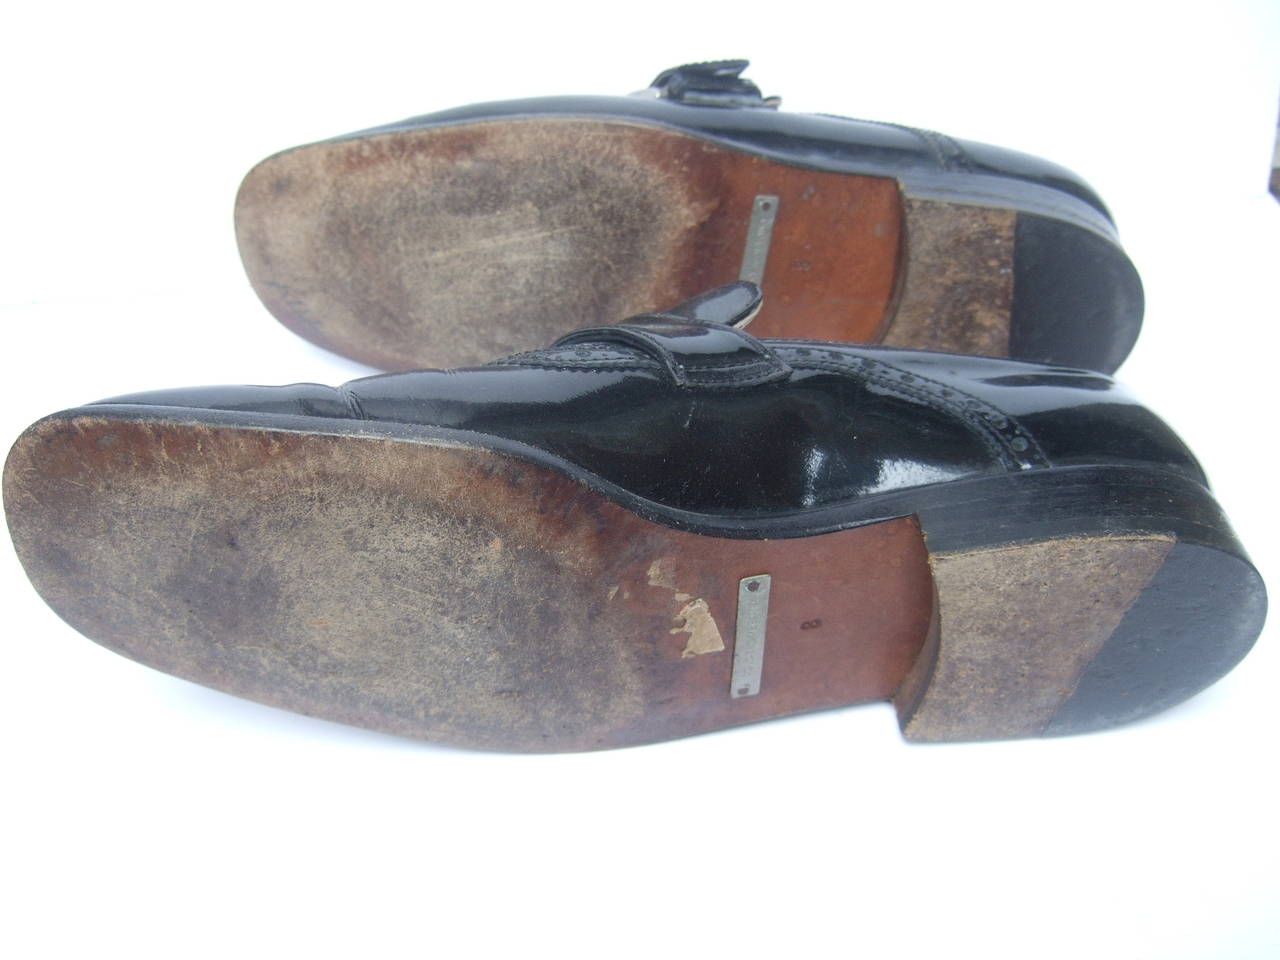 Dolce & Gabbana Men's Black Patent Leather Shoes US Size 8 For Sale 2